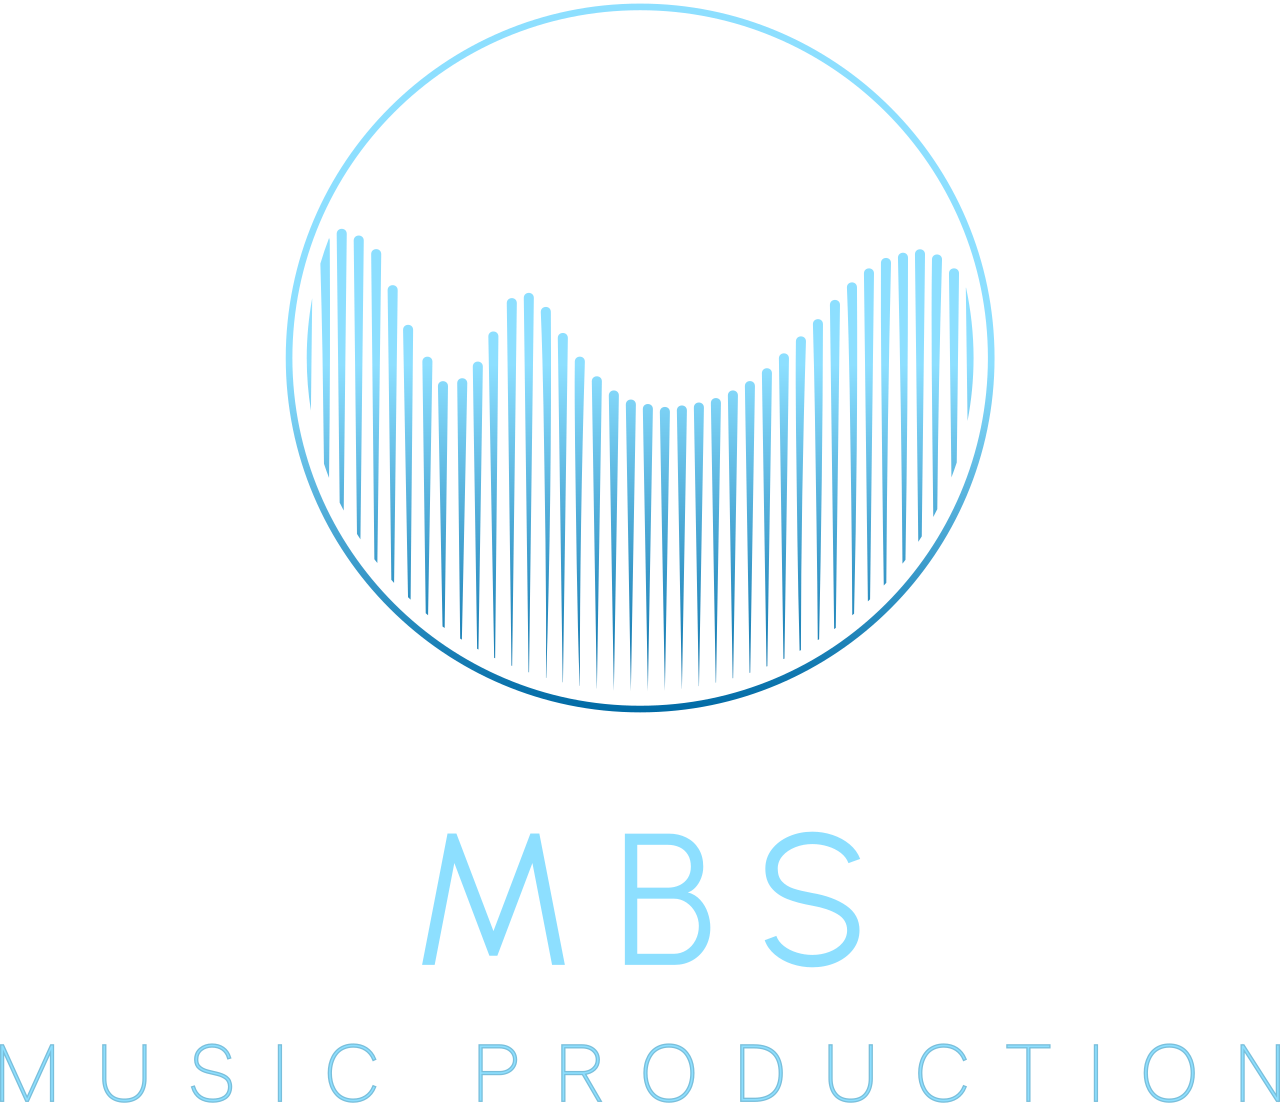 MBS's logo